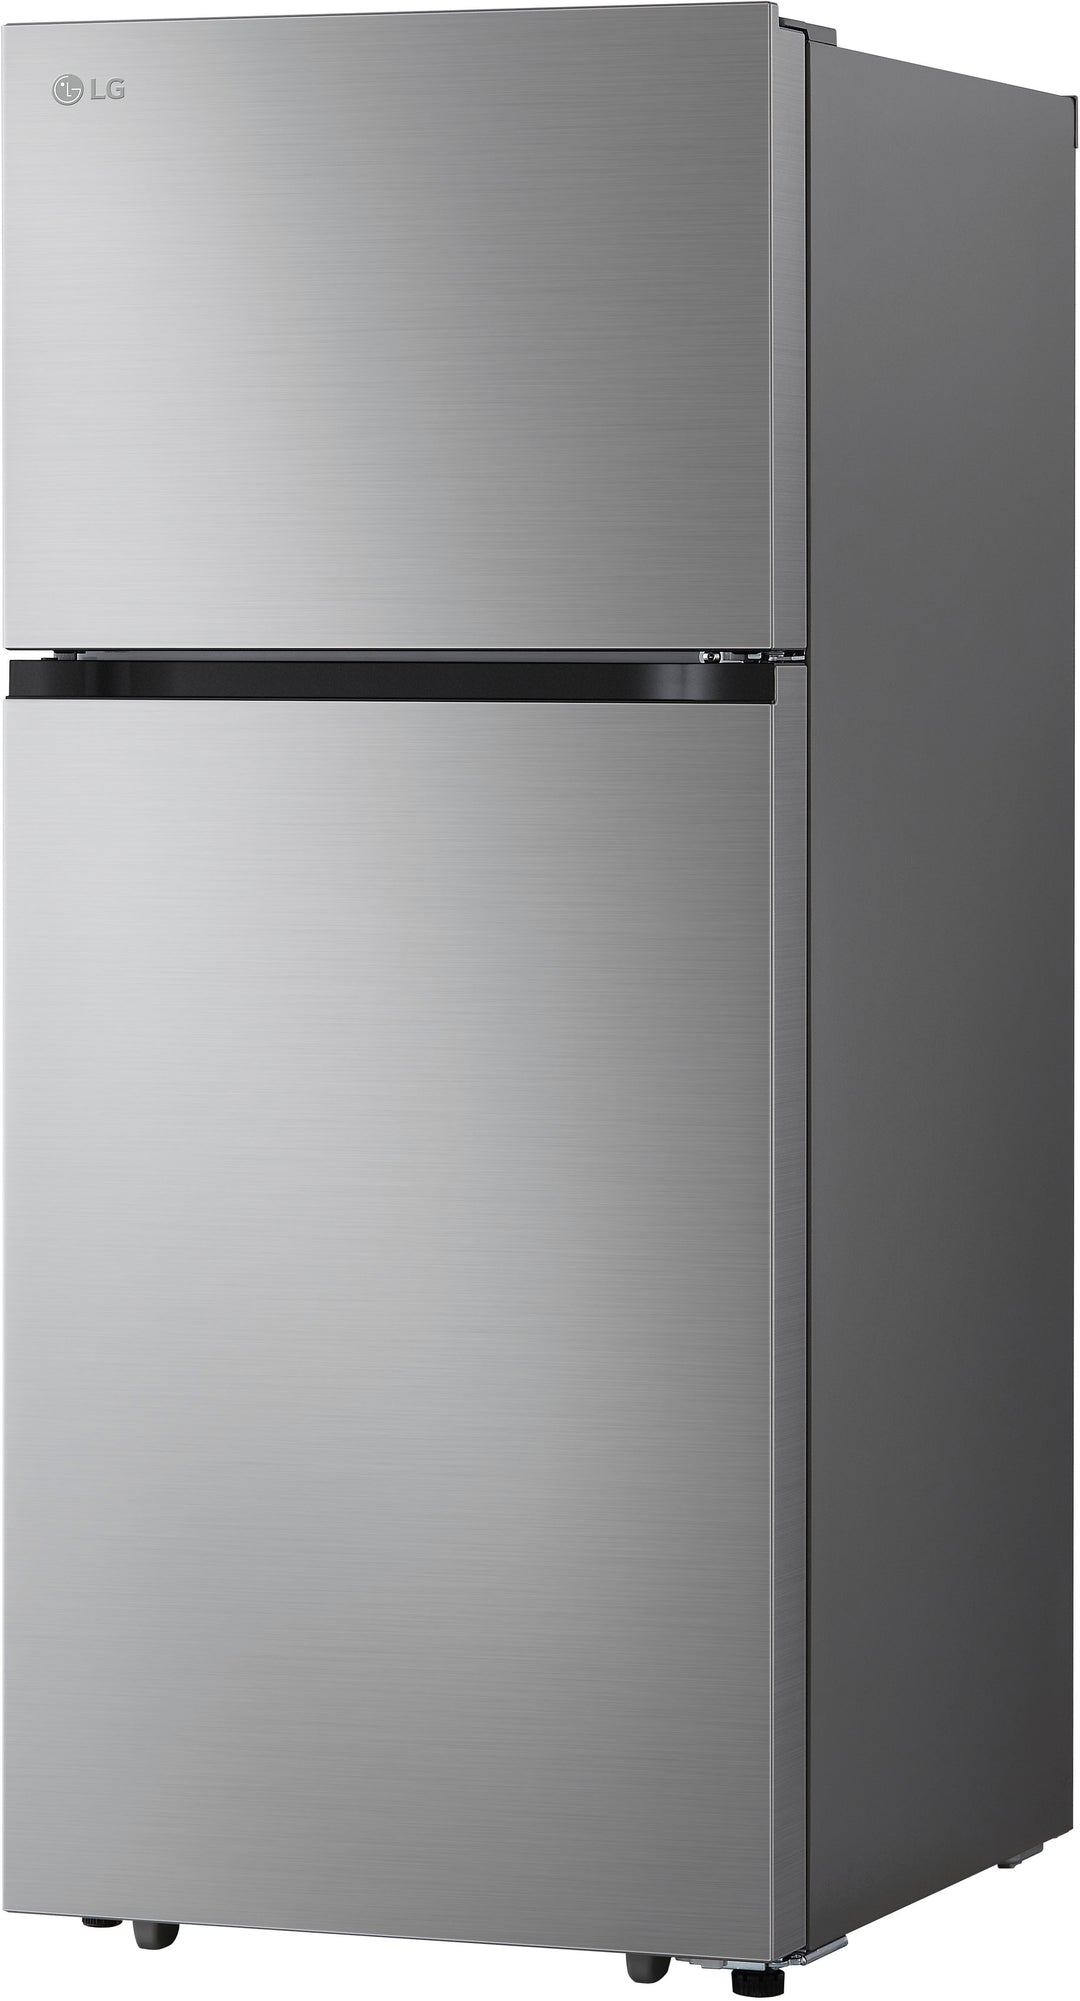 LG - 17.5 Cu. Ft. Top Freezer Refrigerator with Reversible Doors - Stainless Steel_2